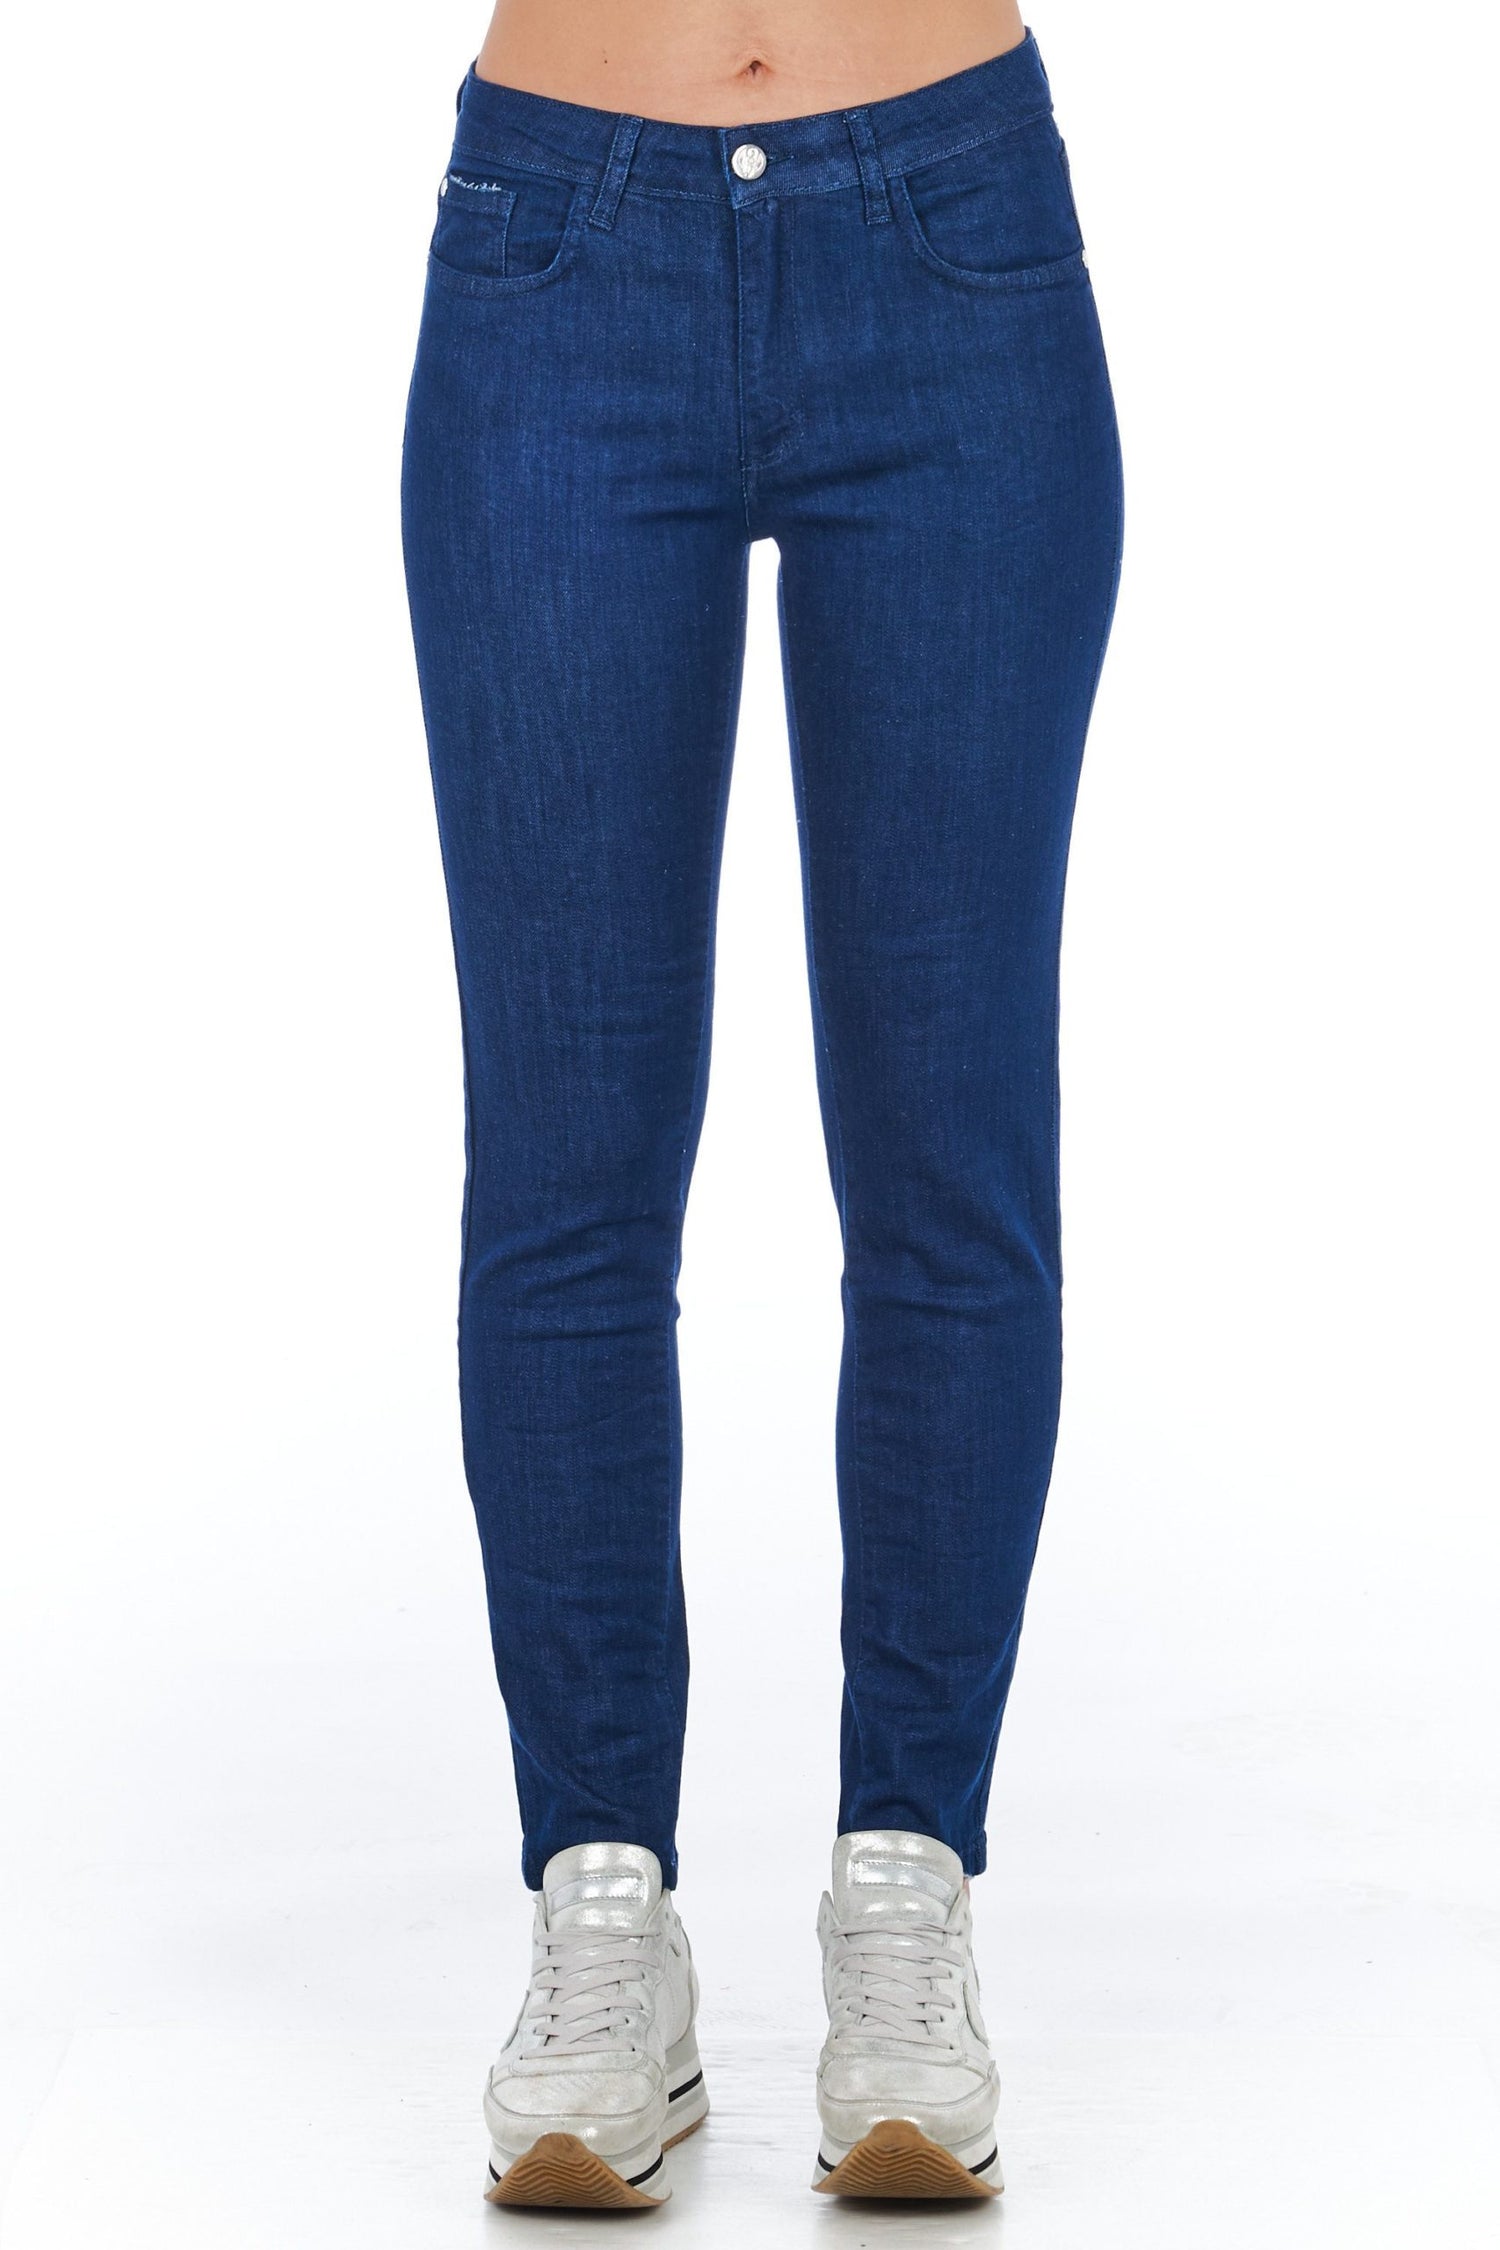 Frankie Morello Blue Cotton Jeans & Pant - DEA STILOSA MILANO